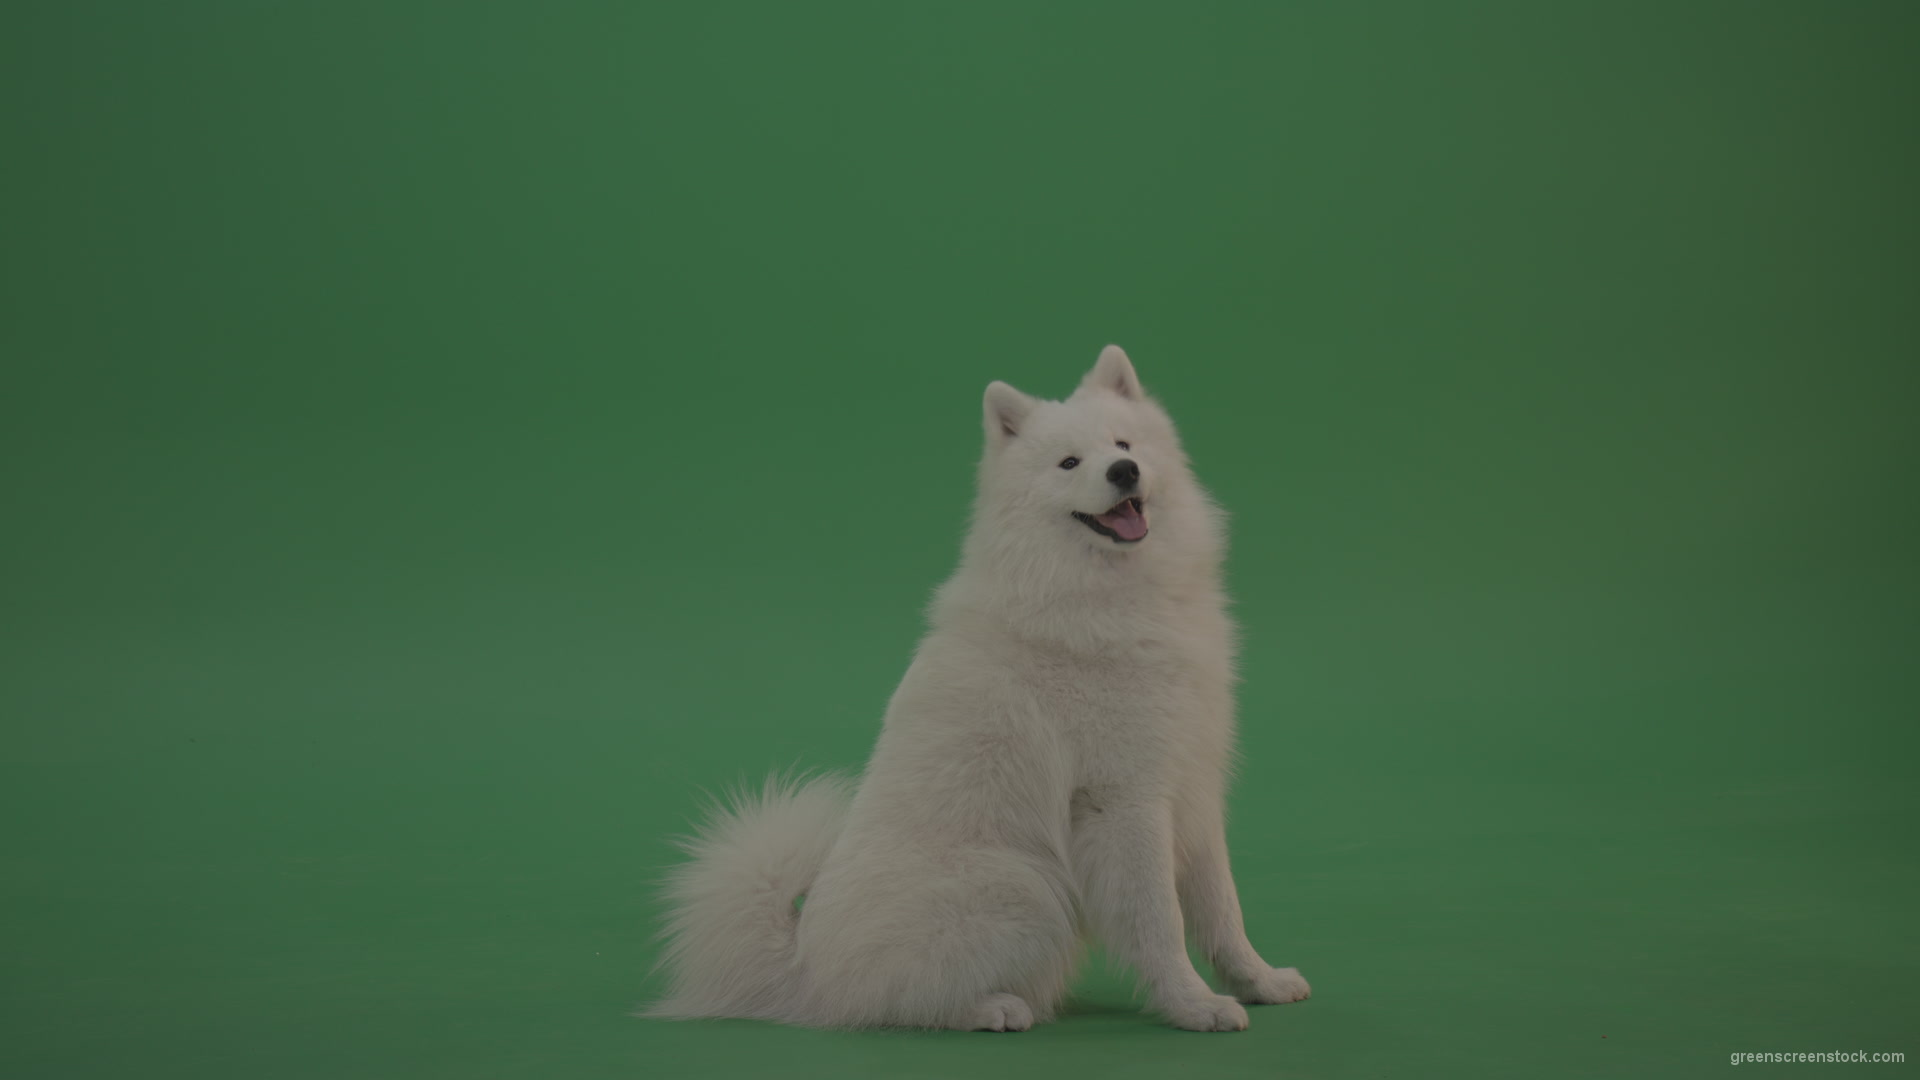 White-Samoyed-Dog-Green-Screen-Stock-11_006 Green Screen Stock